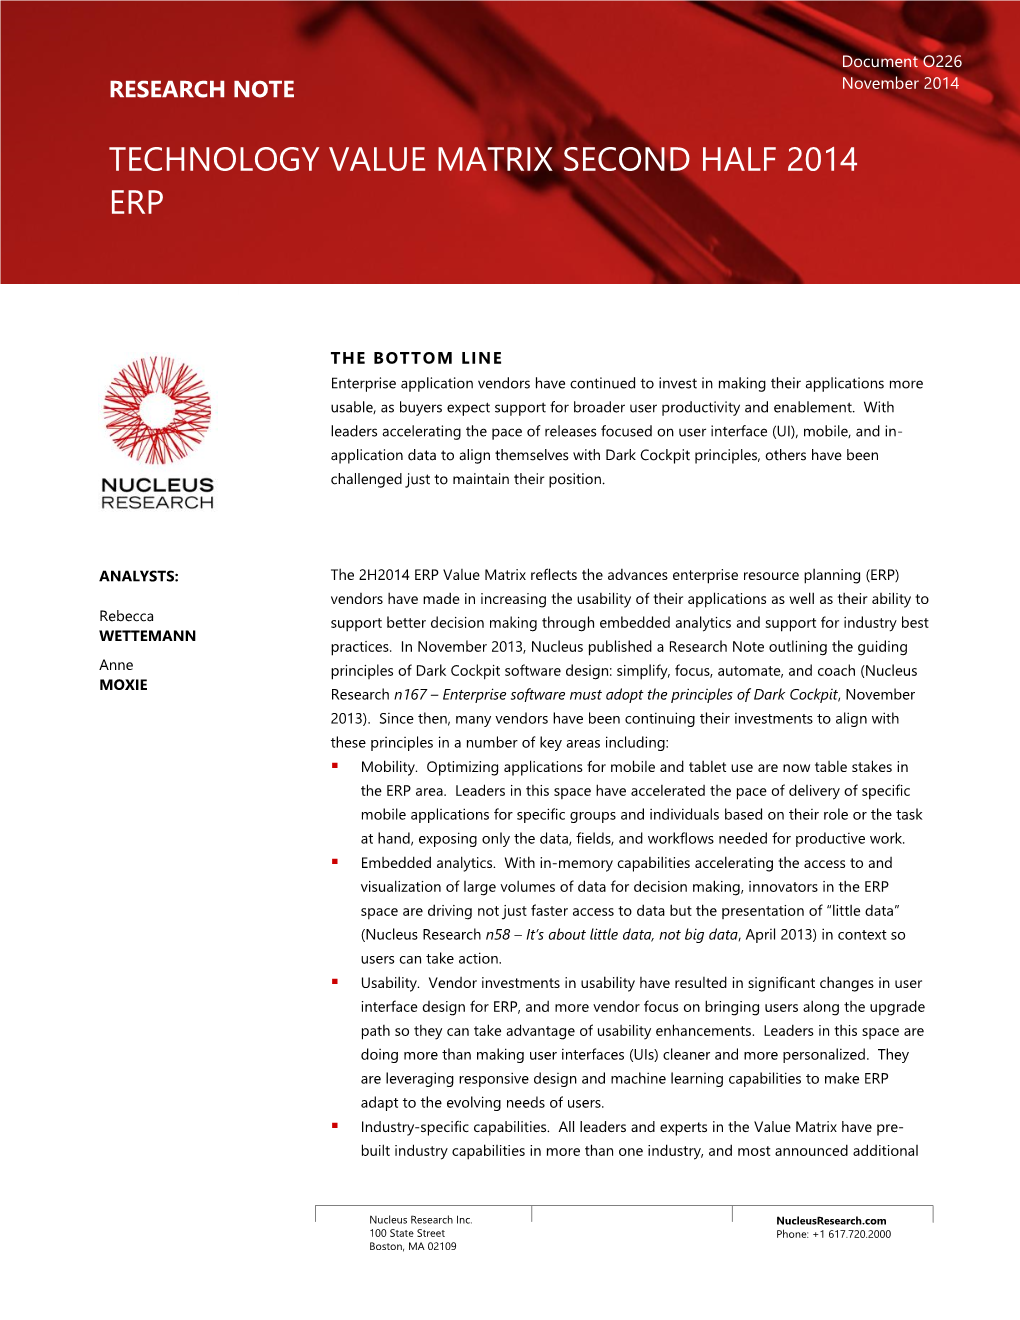 Value Matrix Second Half 2014 Erp